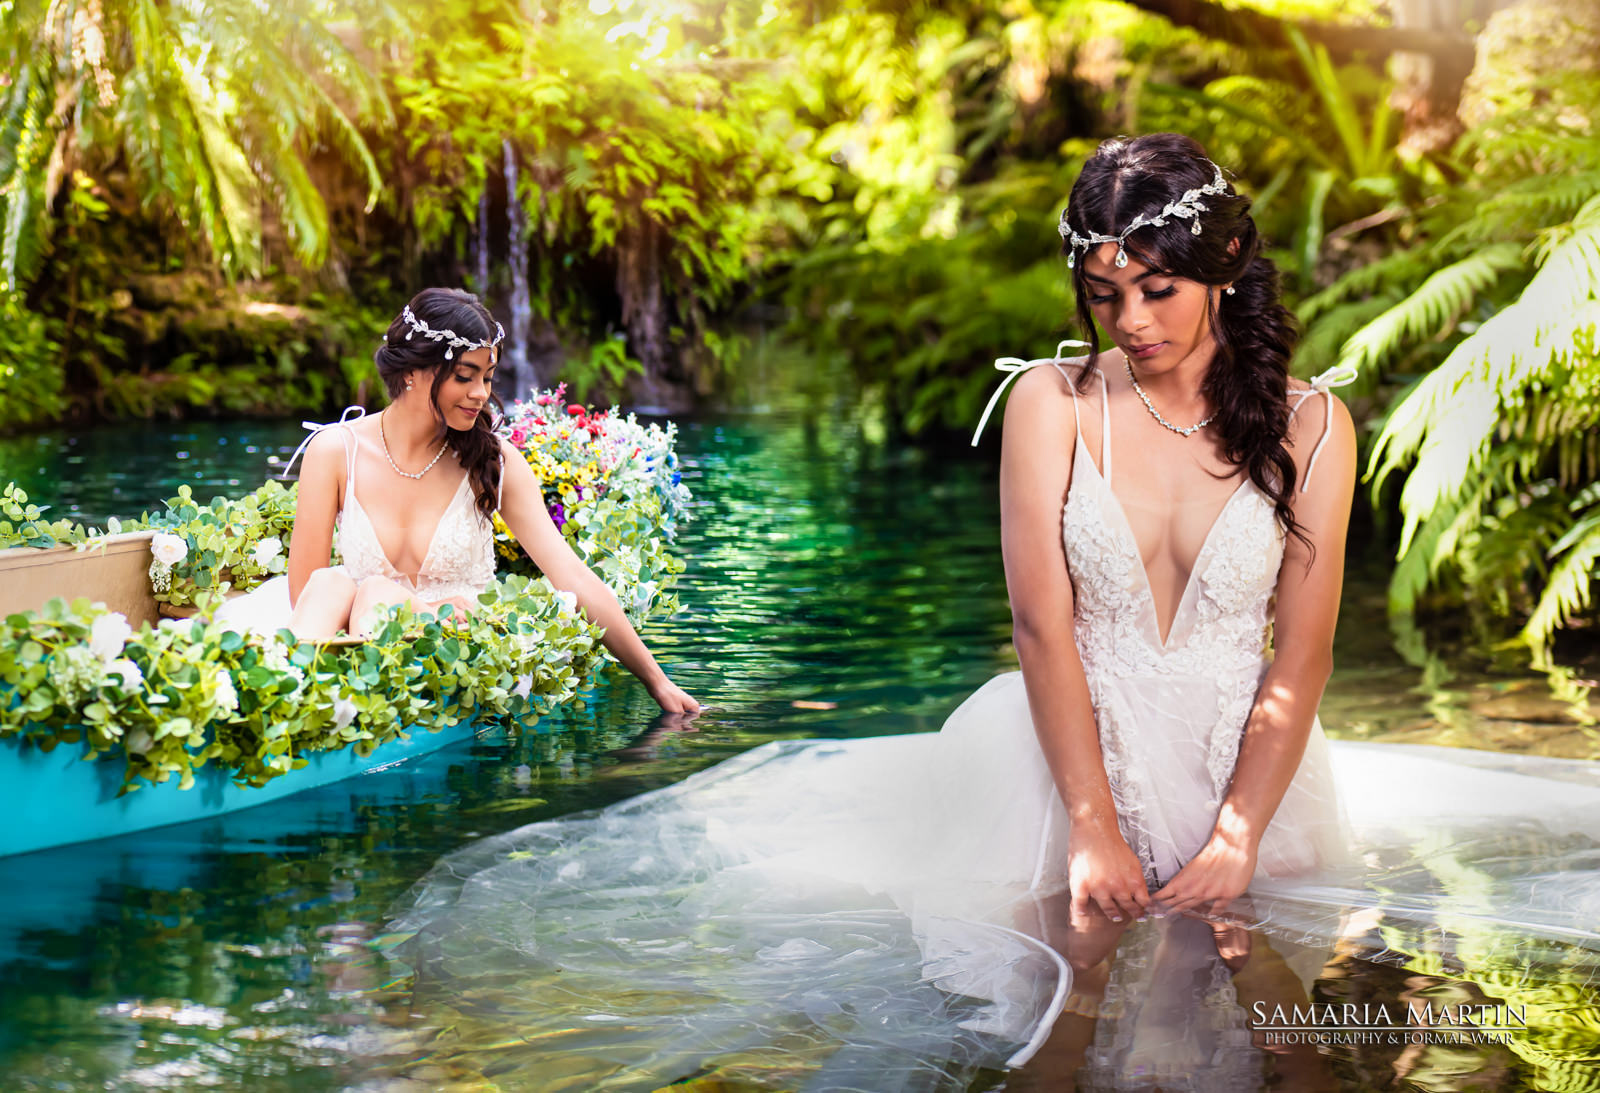 15 photoshoot with flowers, best Miami photographer, Samaria Martin, white quinceanera dresses, Miami Villa Turqueza 1